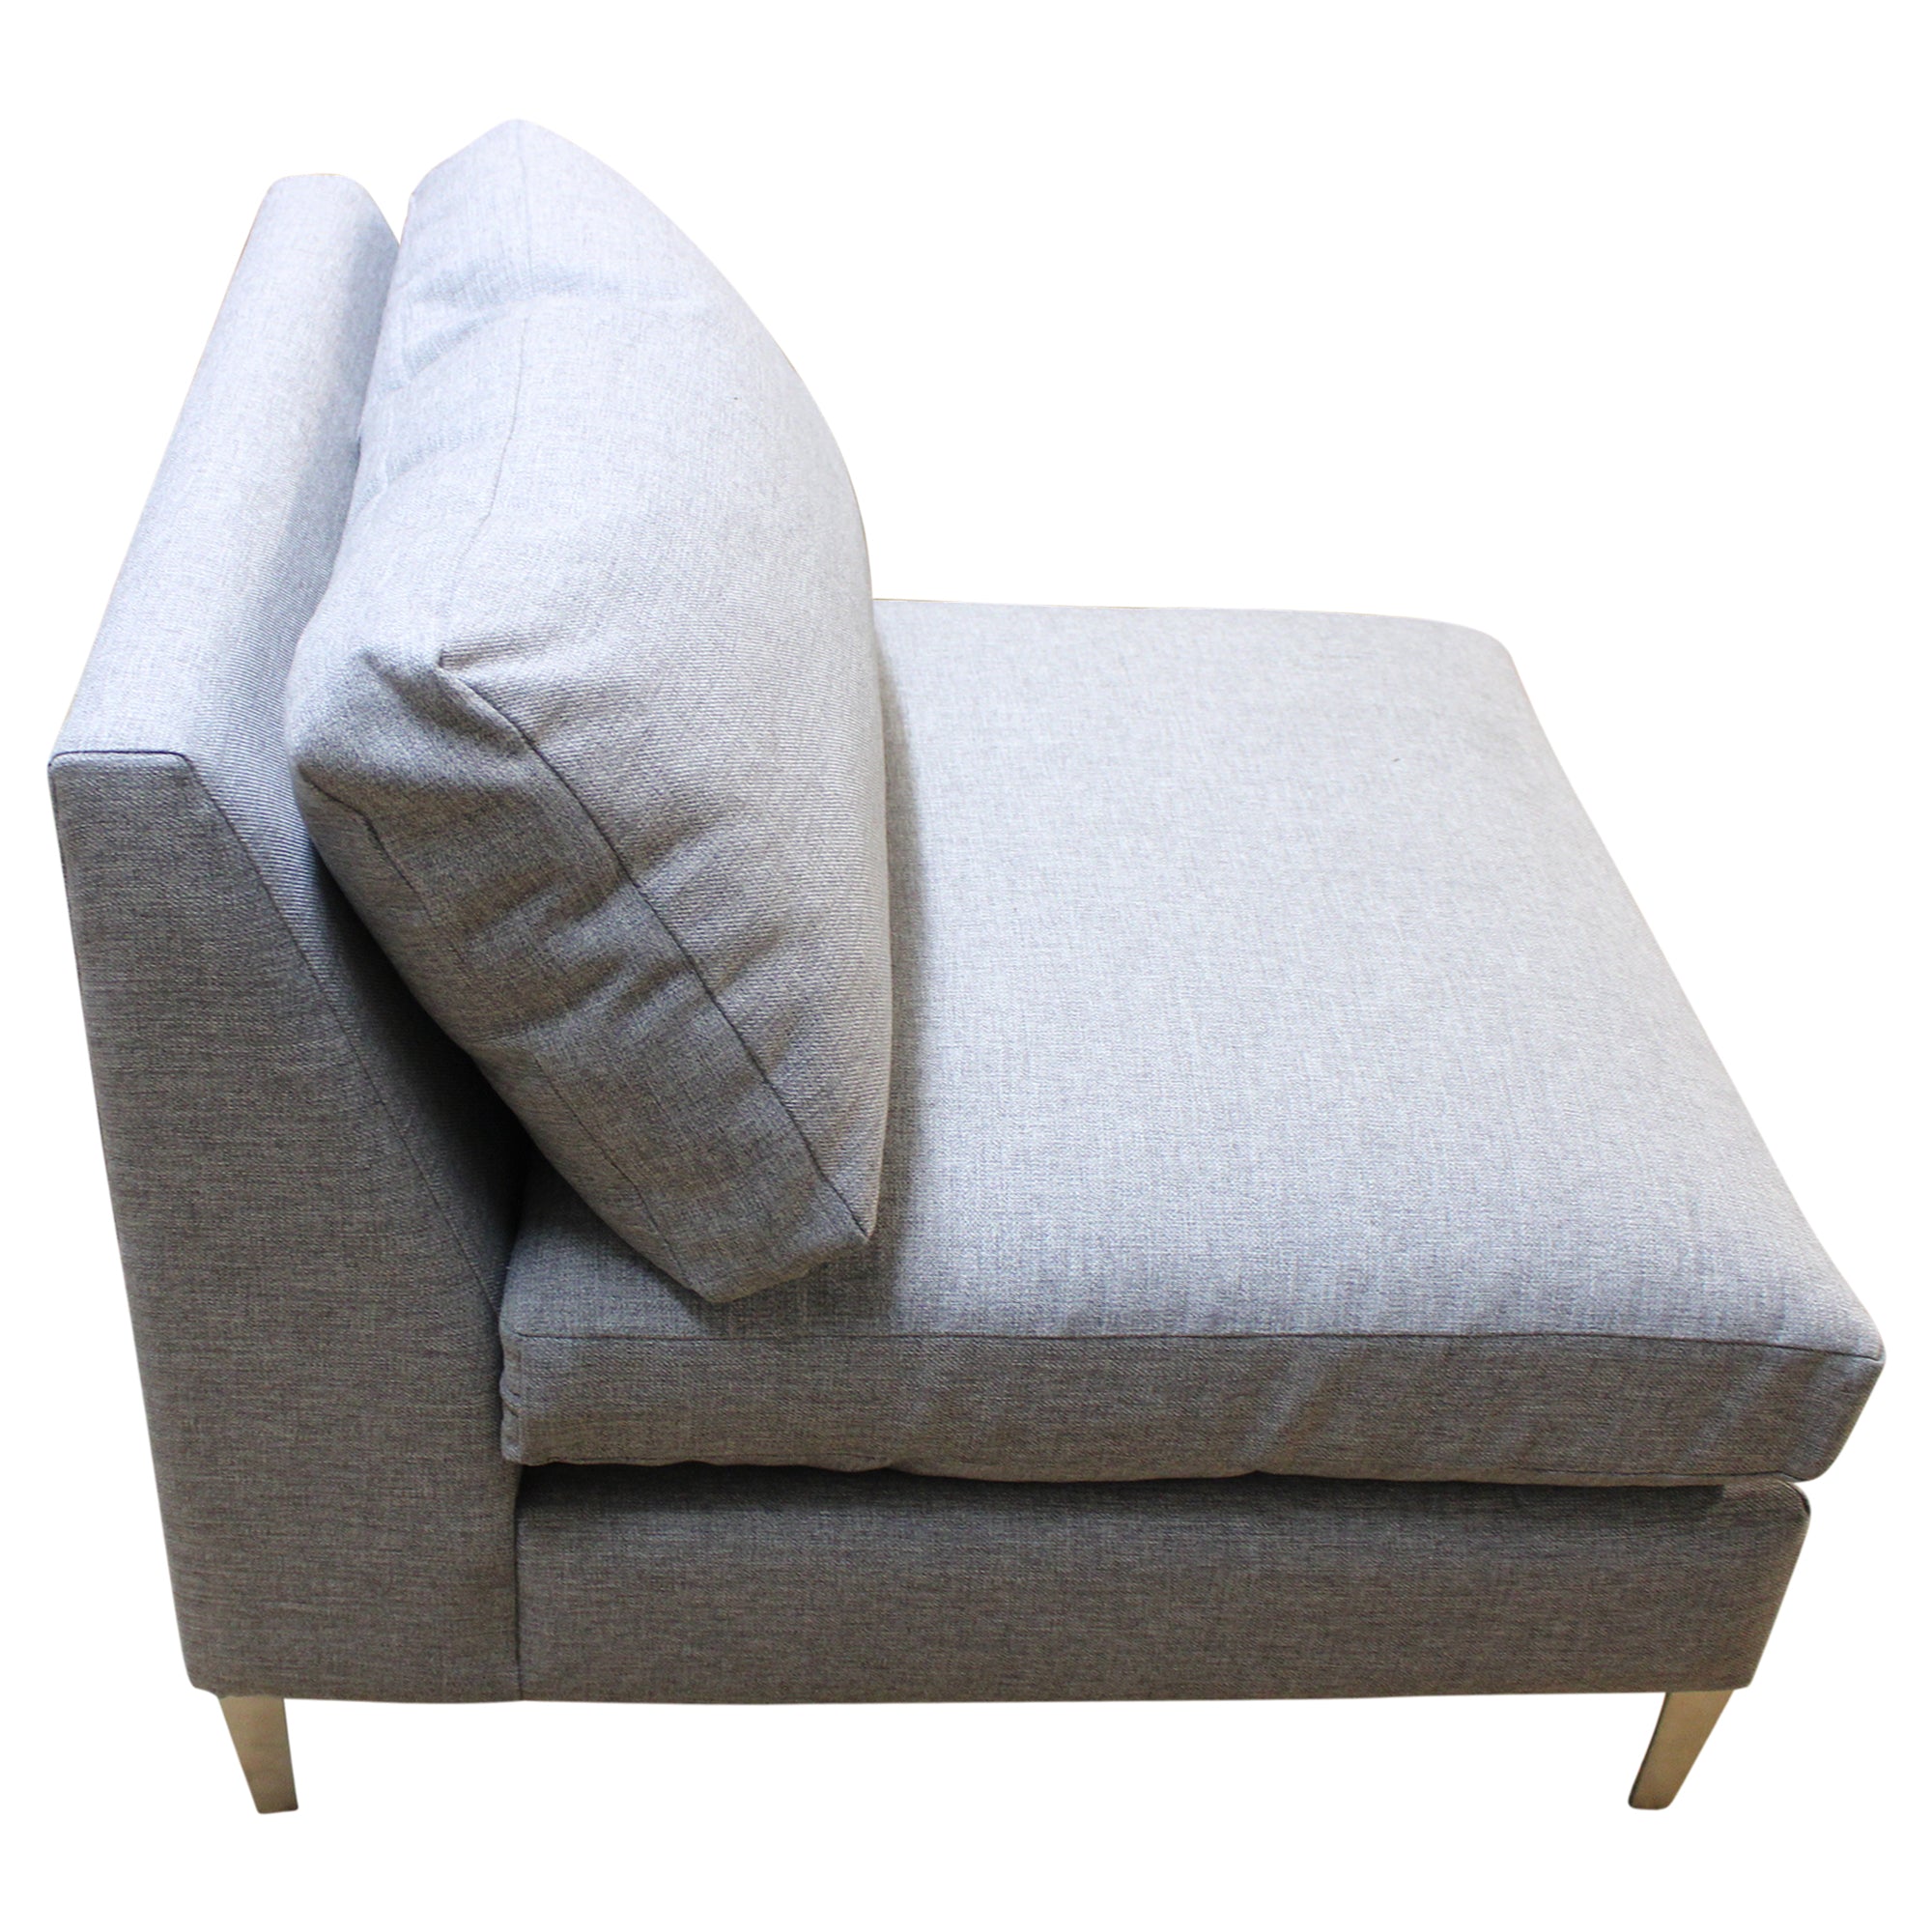 CB2 Decker Armless Lounge Chair - Preowned